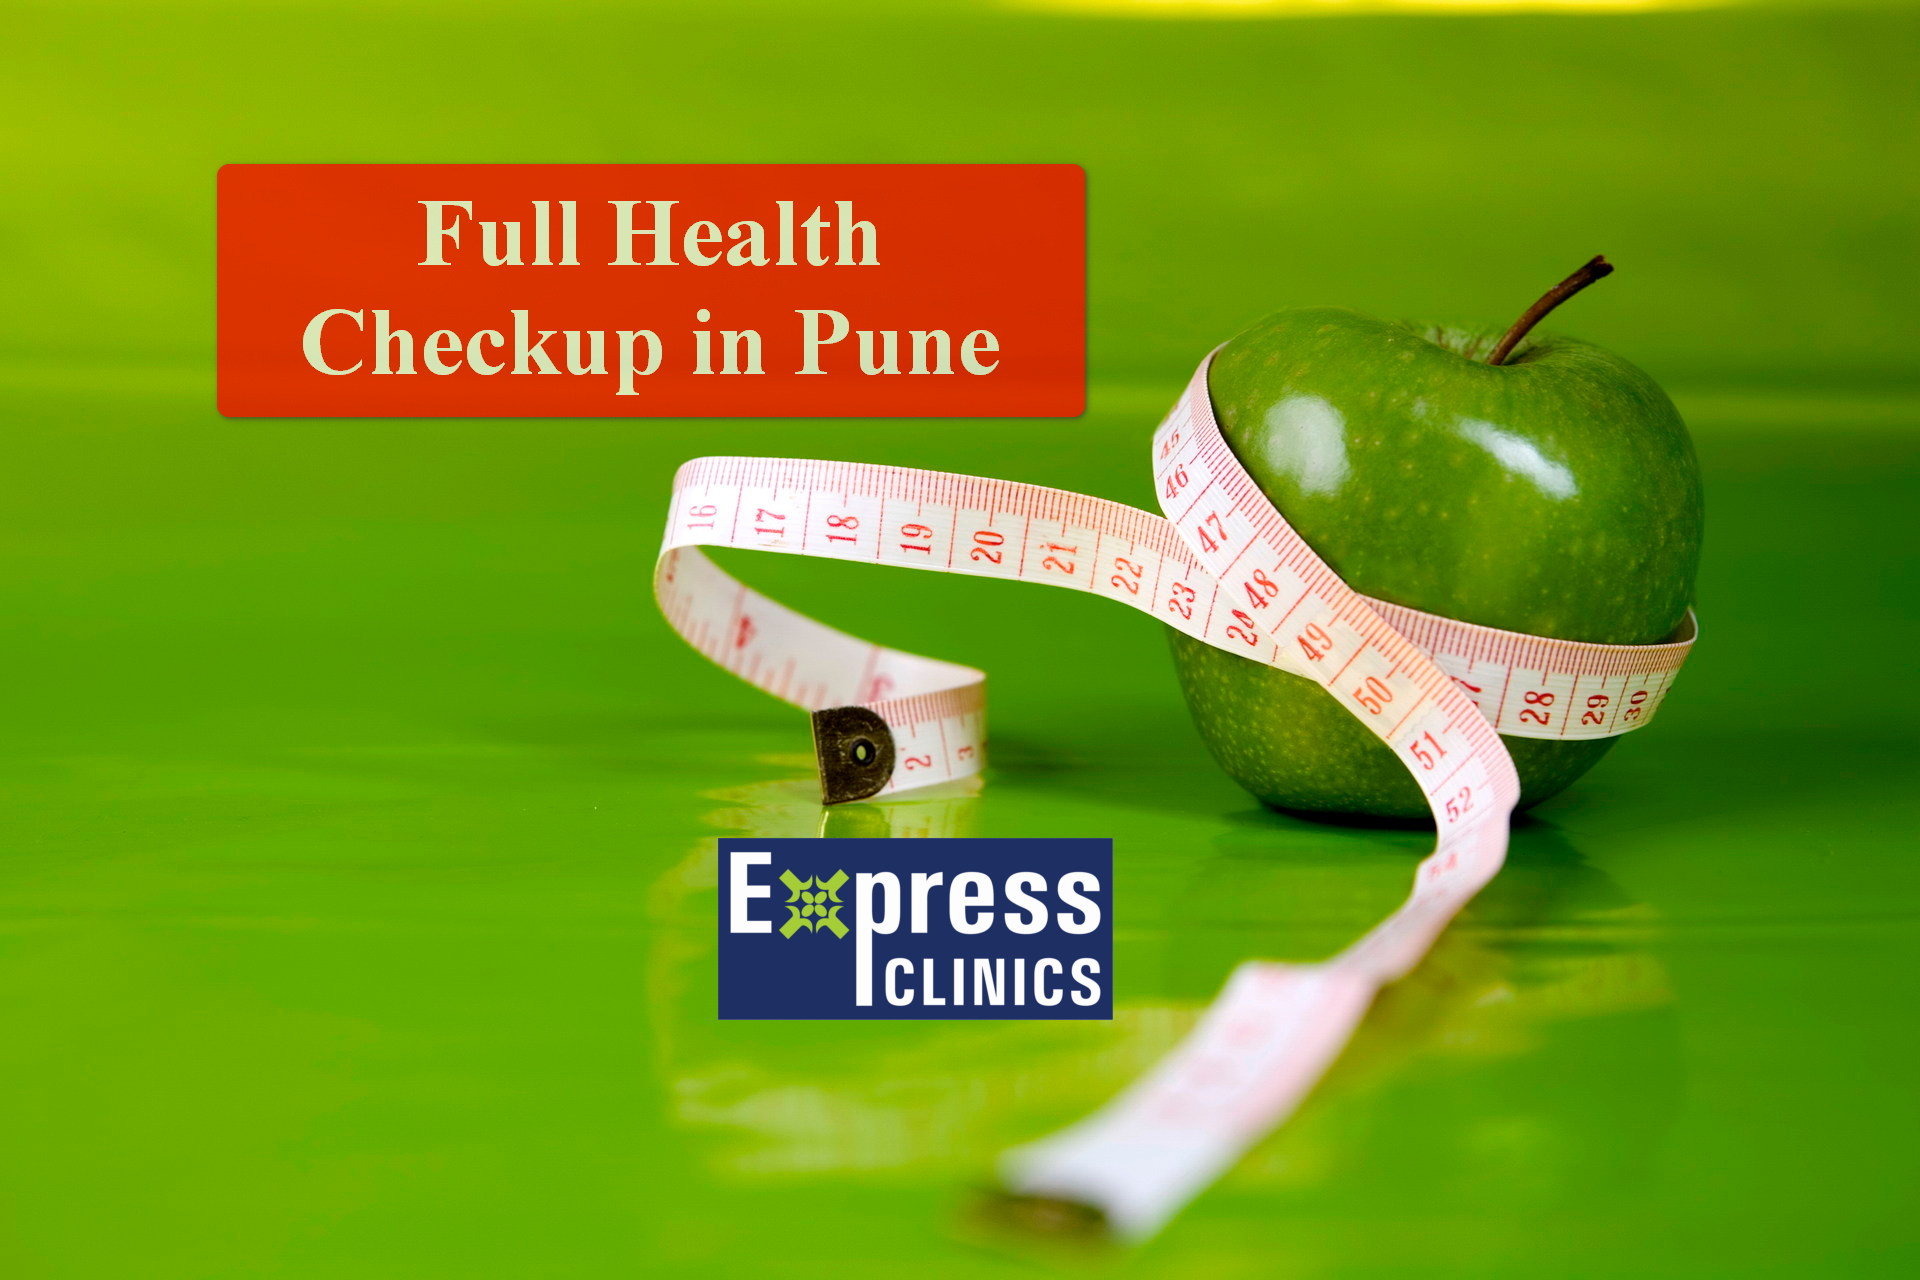 Full Health Checkup in Pune